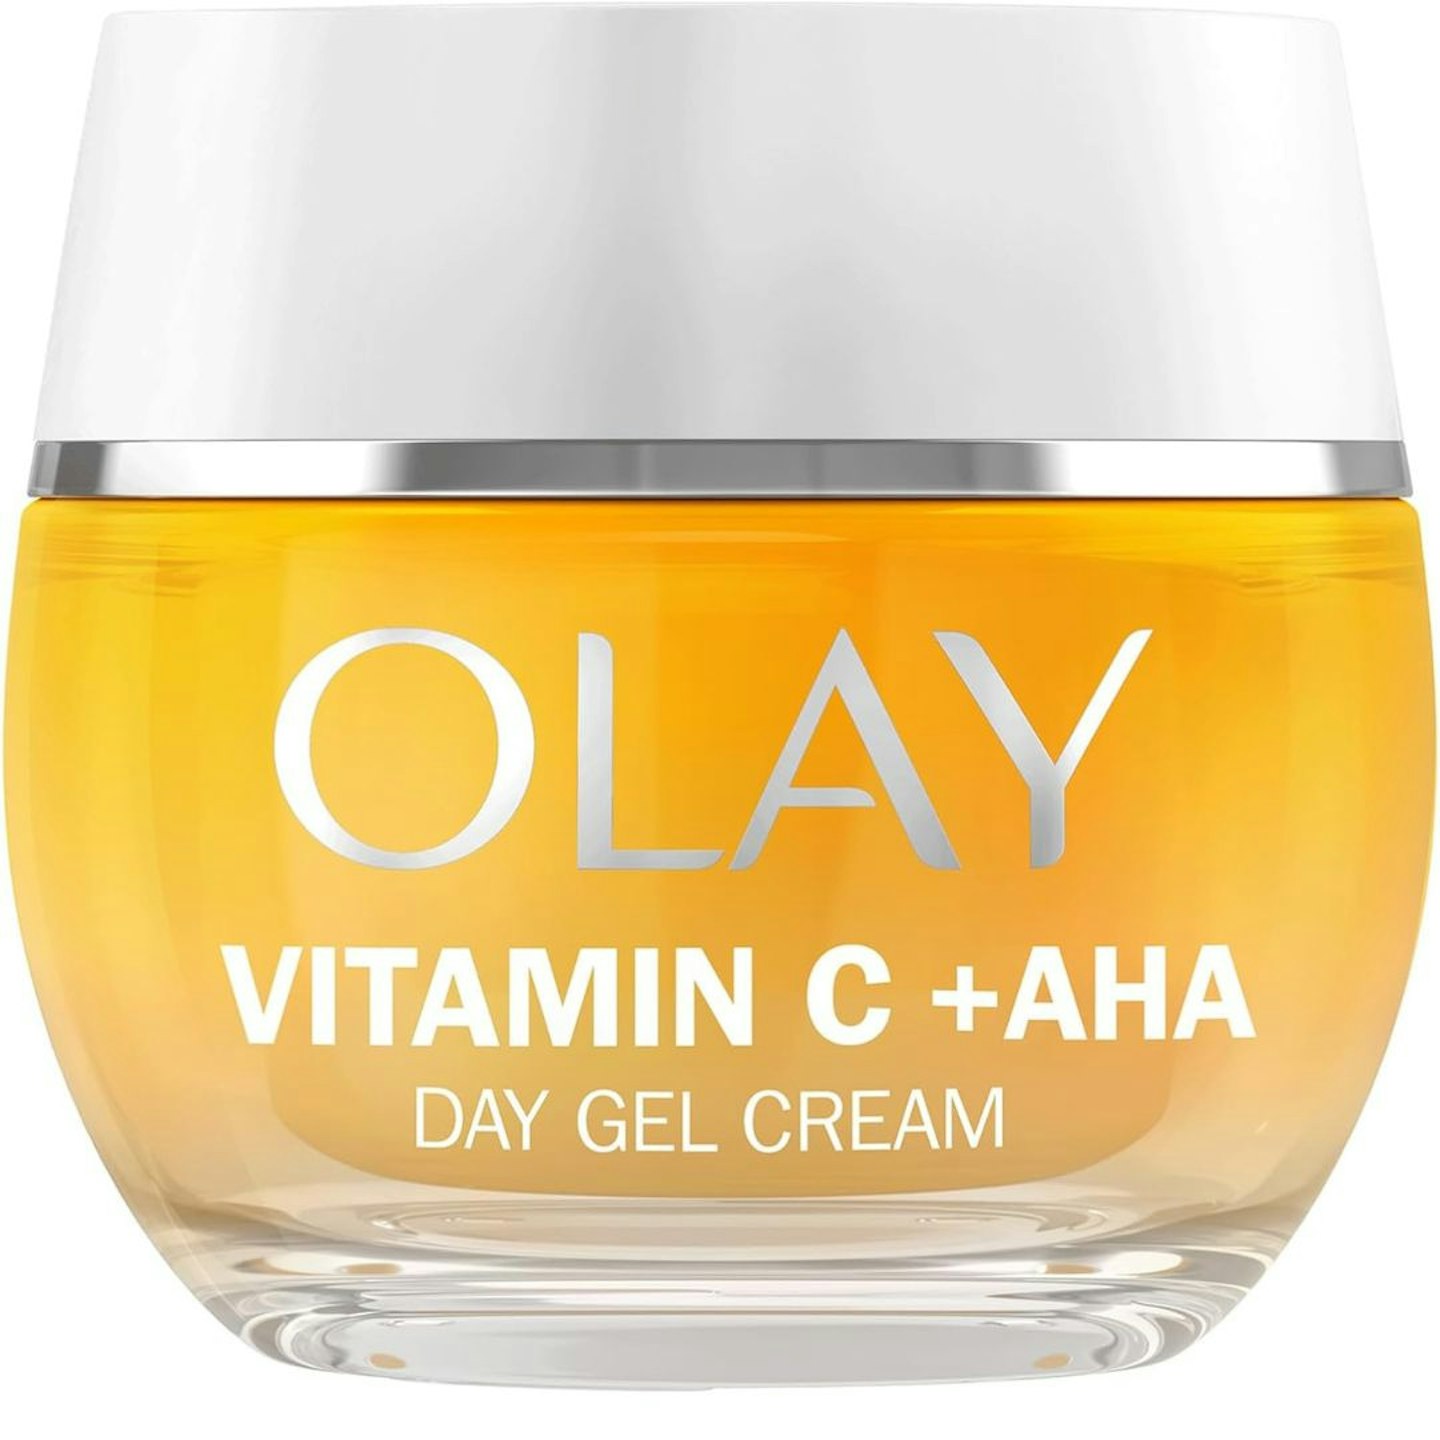  Olay Vitamin C Face Moisturiser Day Gel Cream